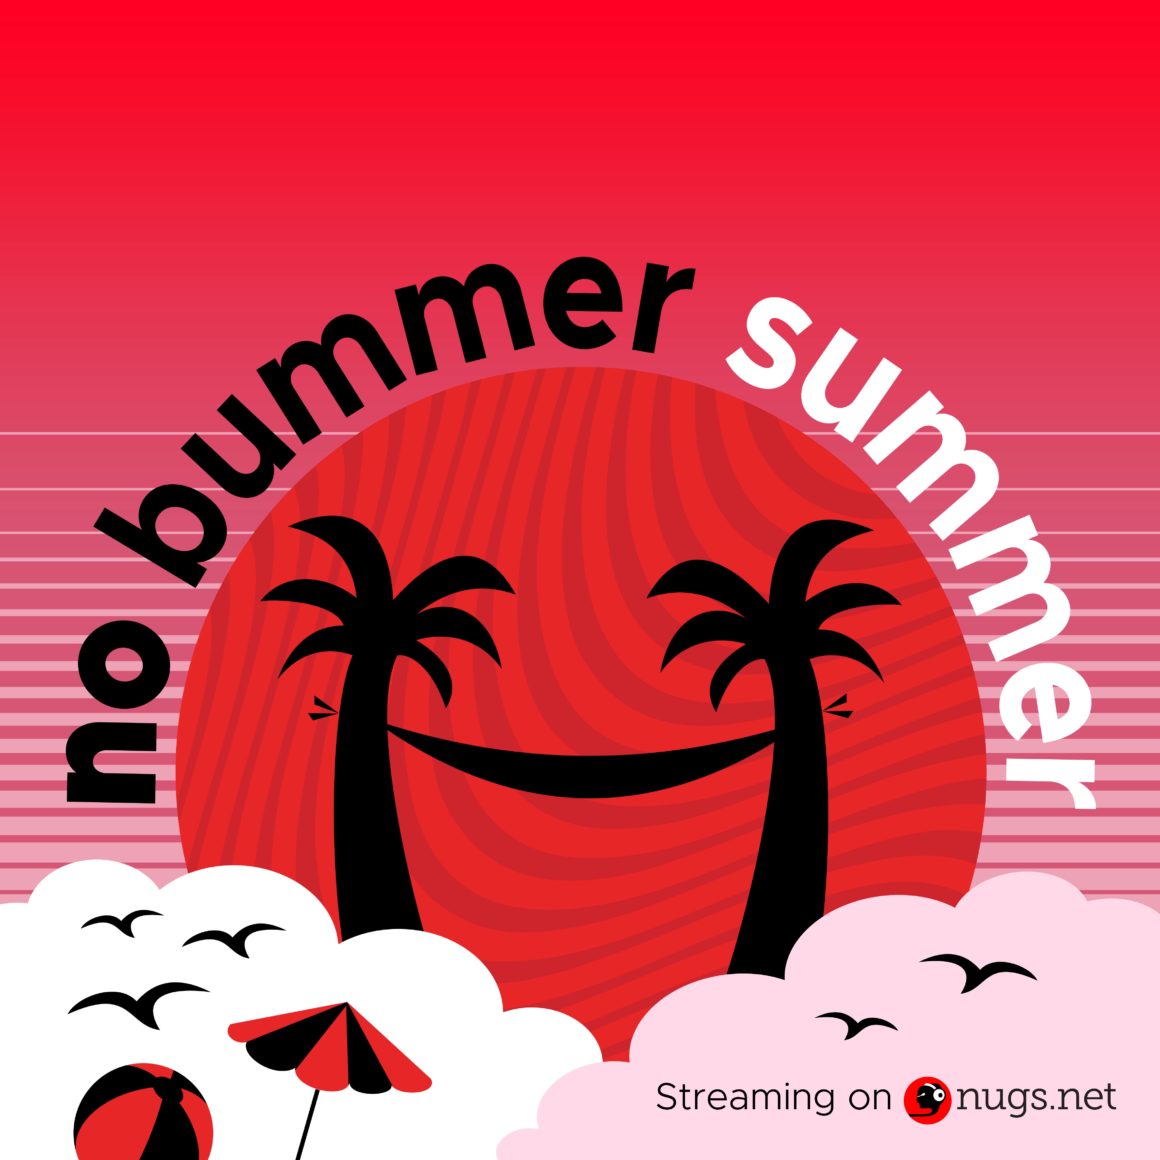 Get Ready For A Rocking No Bummer Summer on nugs.net